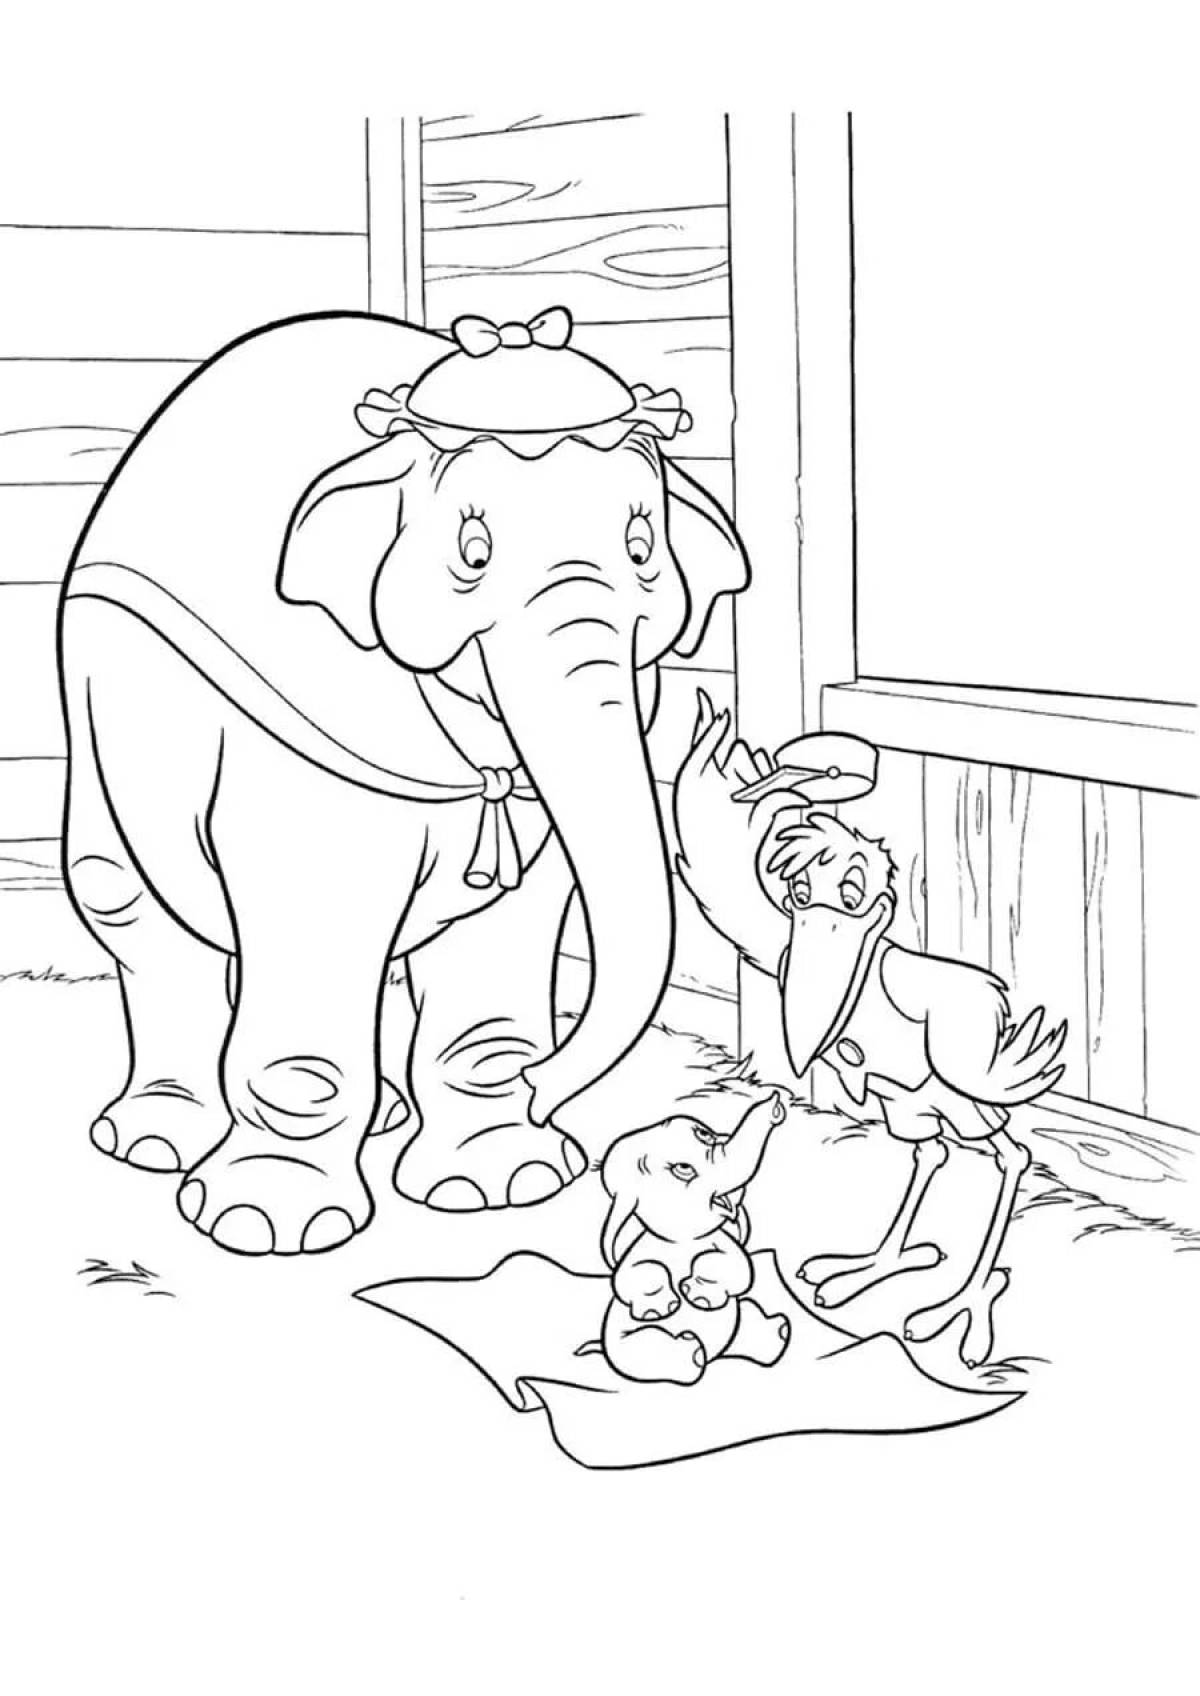 Coloring page wonderful elephant kuprin